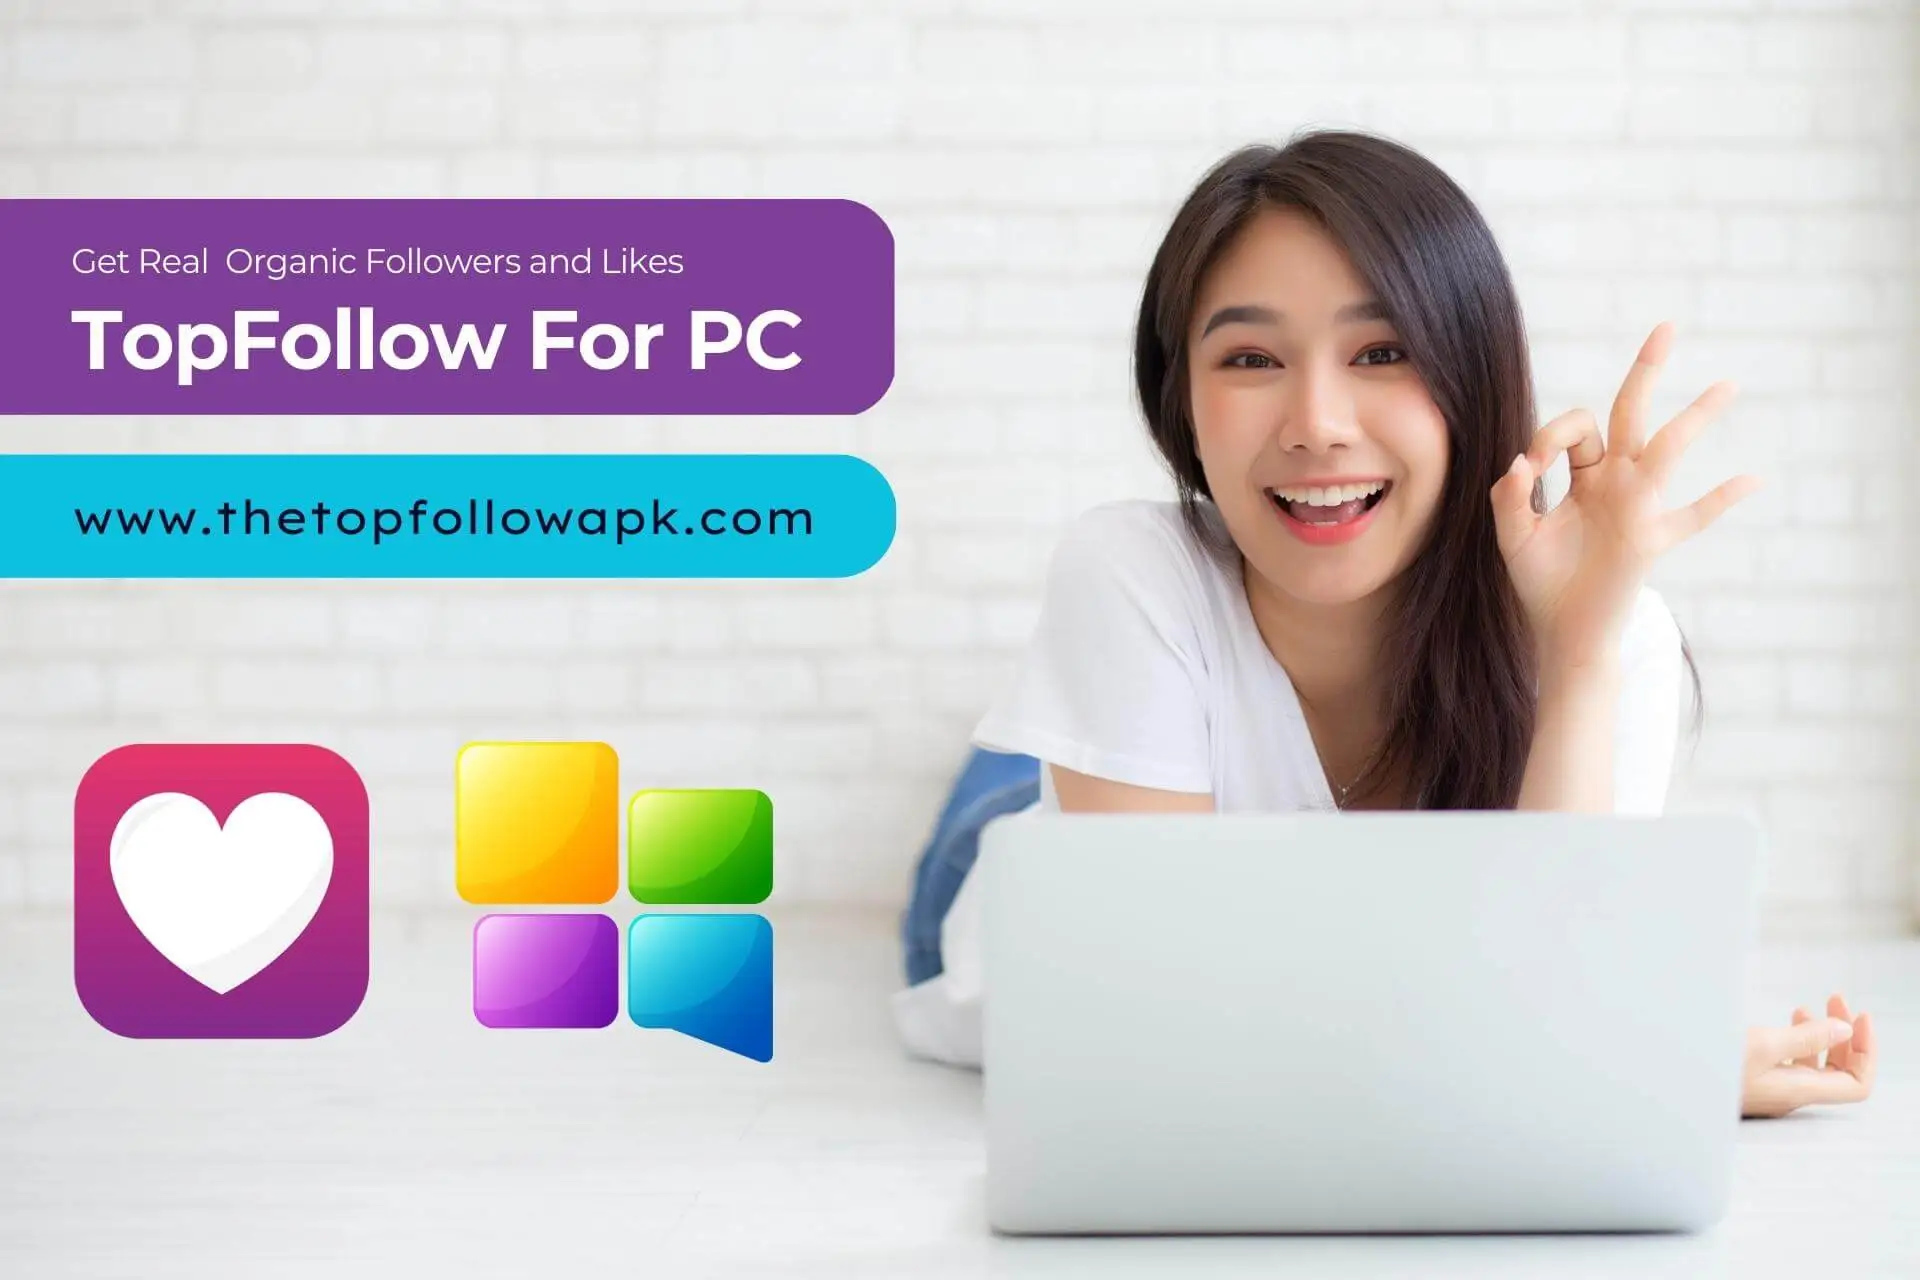 TopFollow For PC